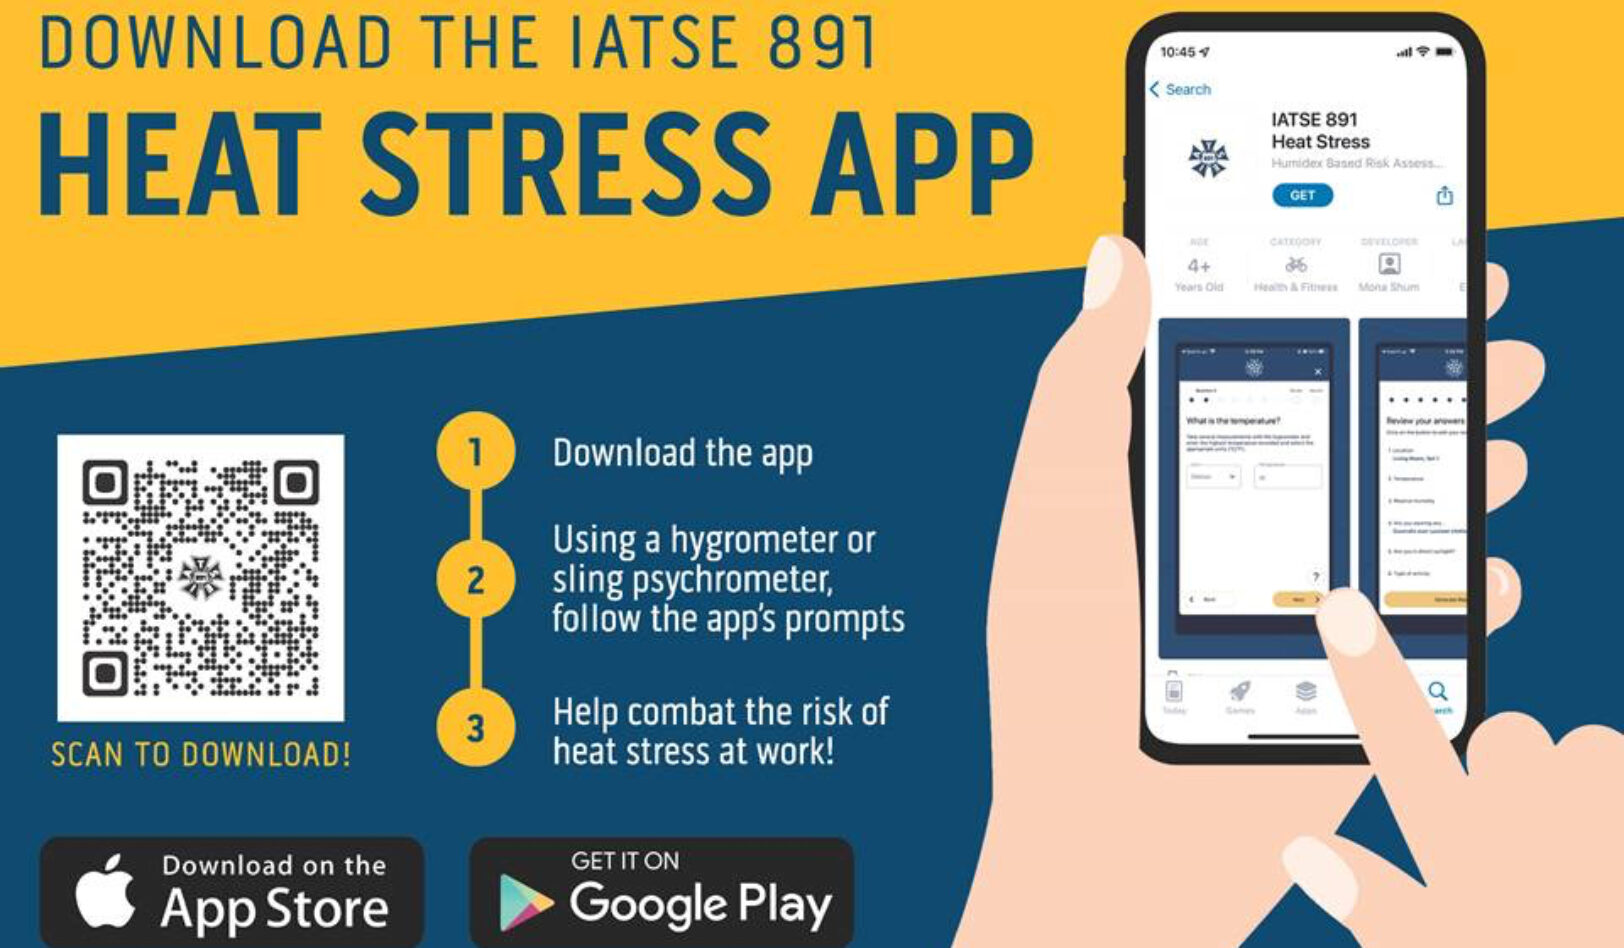 IATSE 891 launches New App